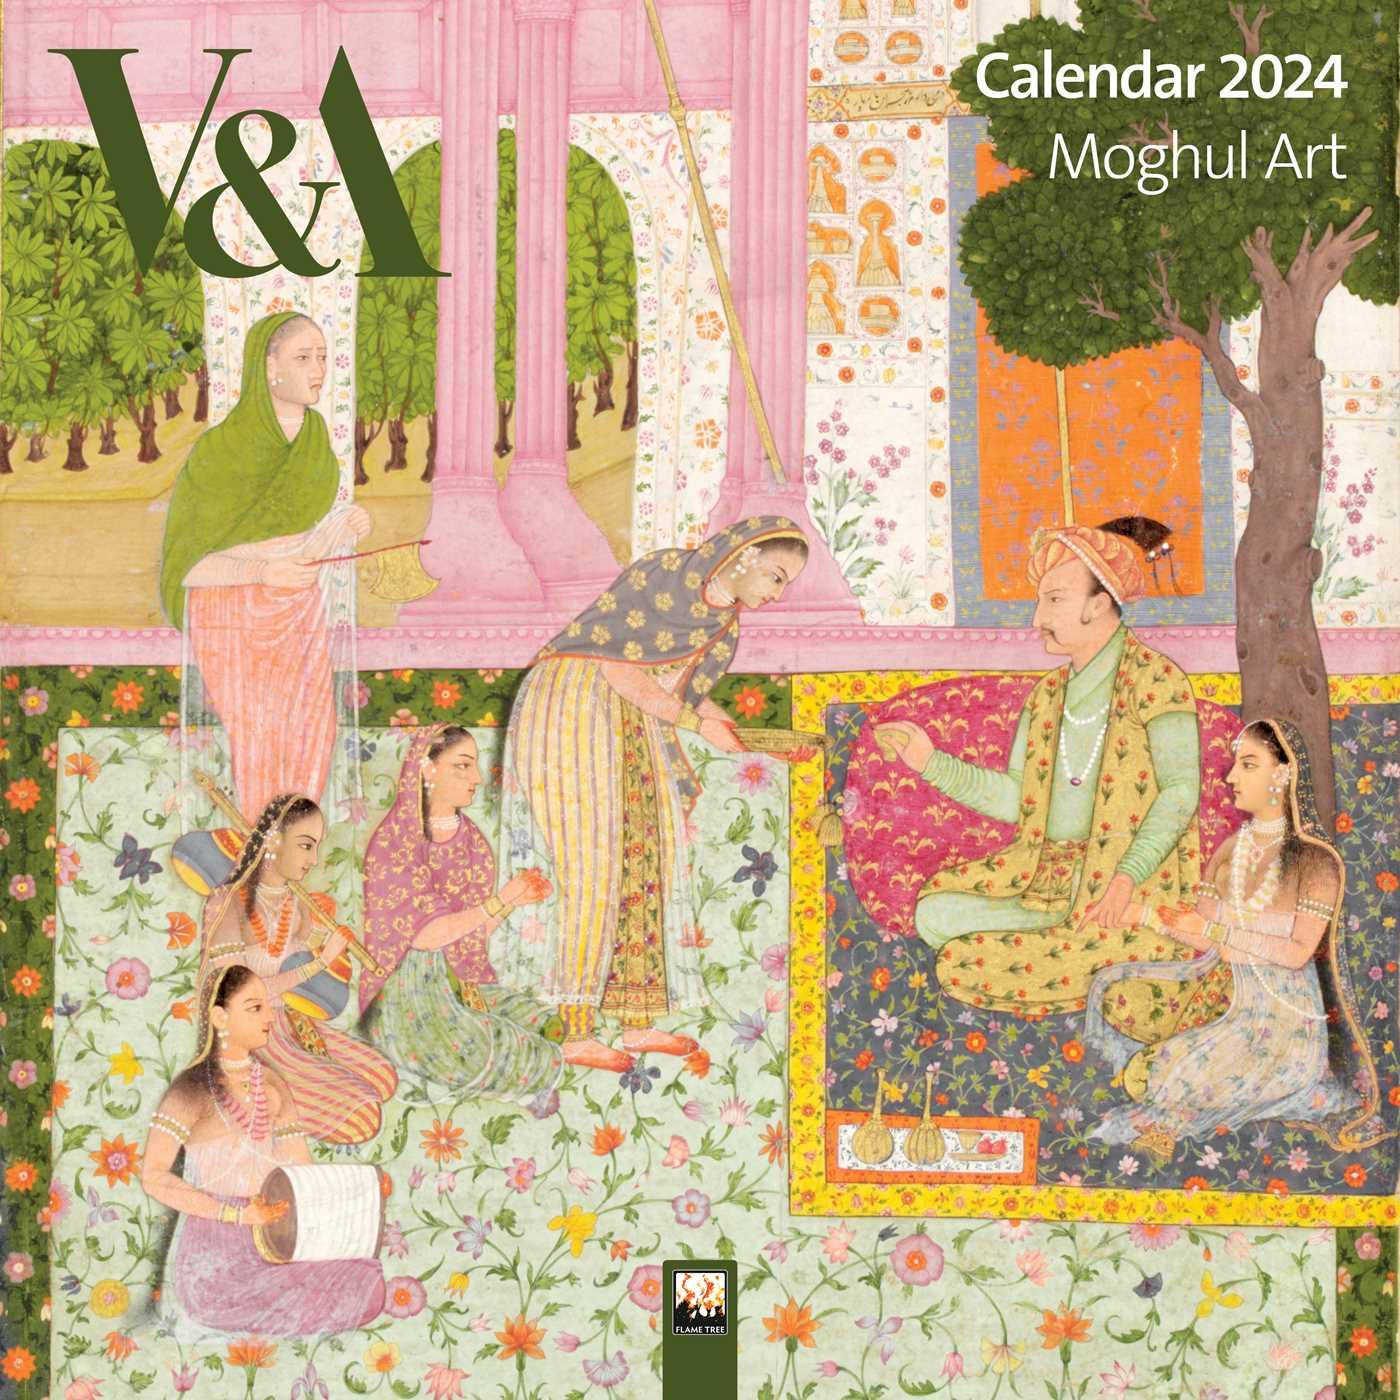 Calendar / Agendă V&a: Moghul Art Wall Calendar 2024 (Art Calendar) 